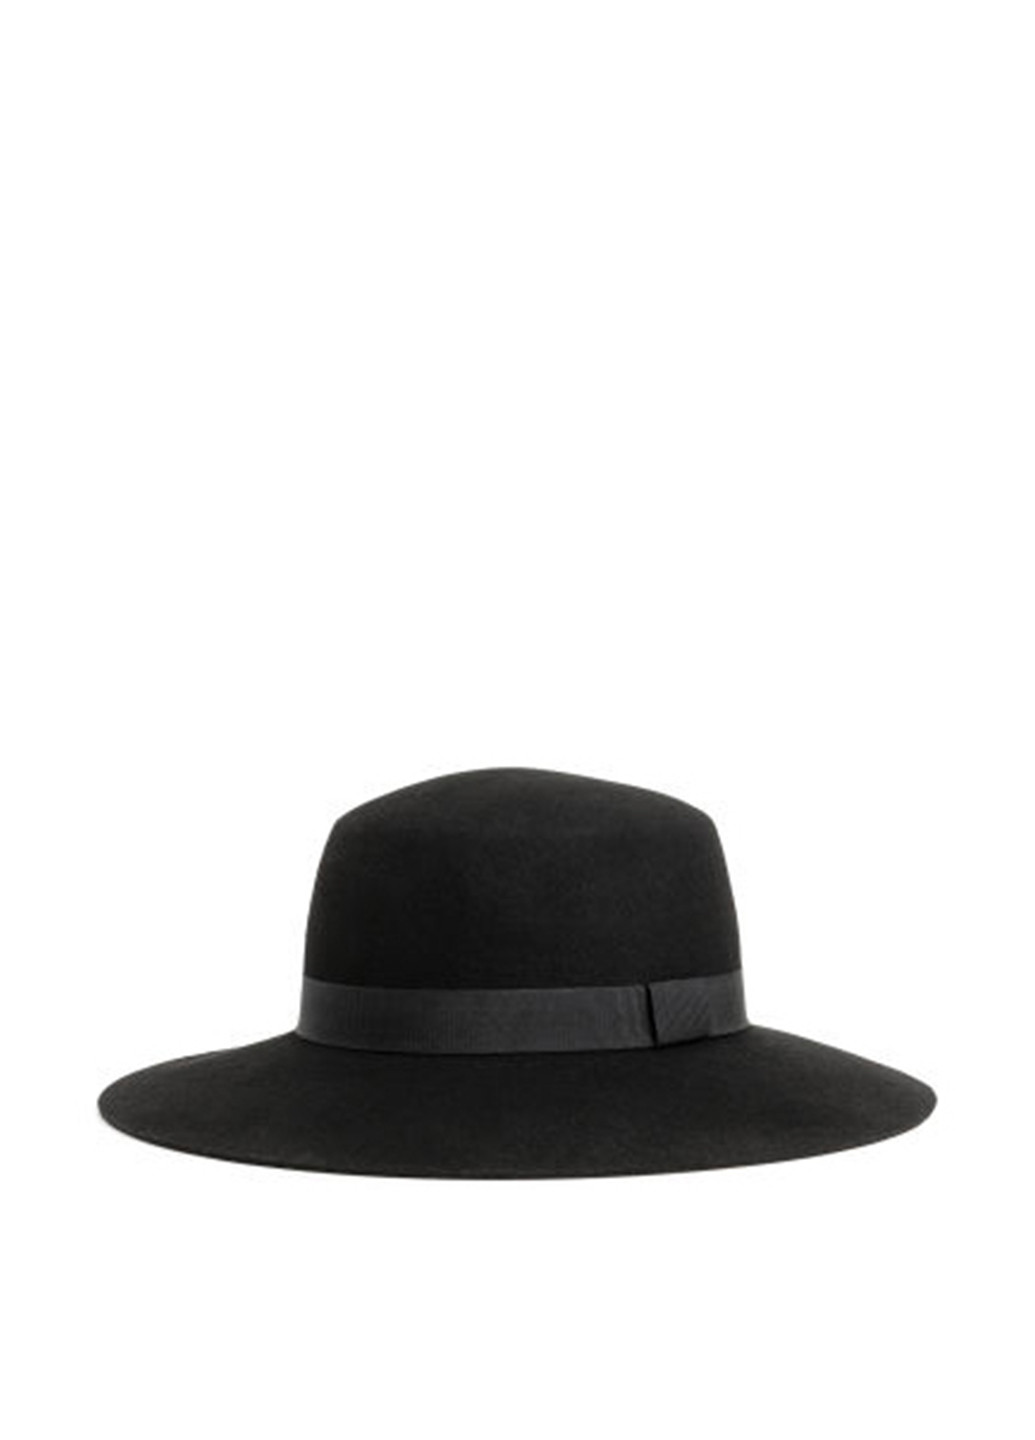 Шляпа H&M широкополая однотонная чёрная кэжуал шерсть